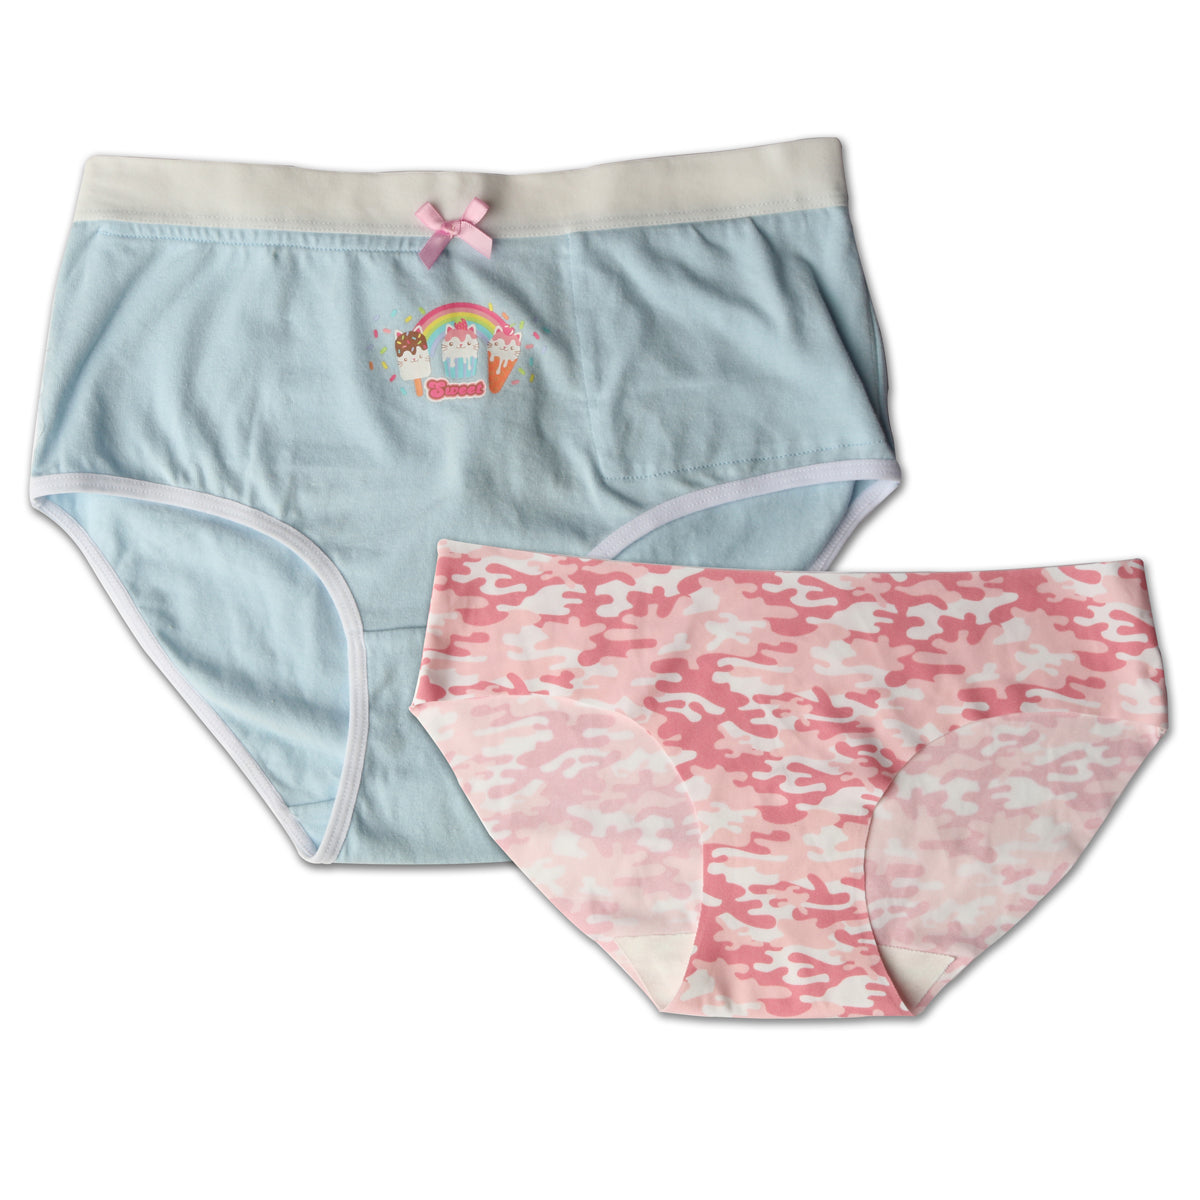 Girls Emergency Underwear Kit